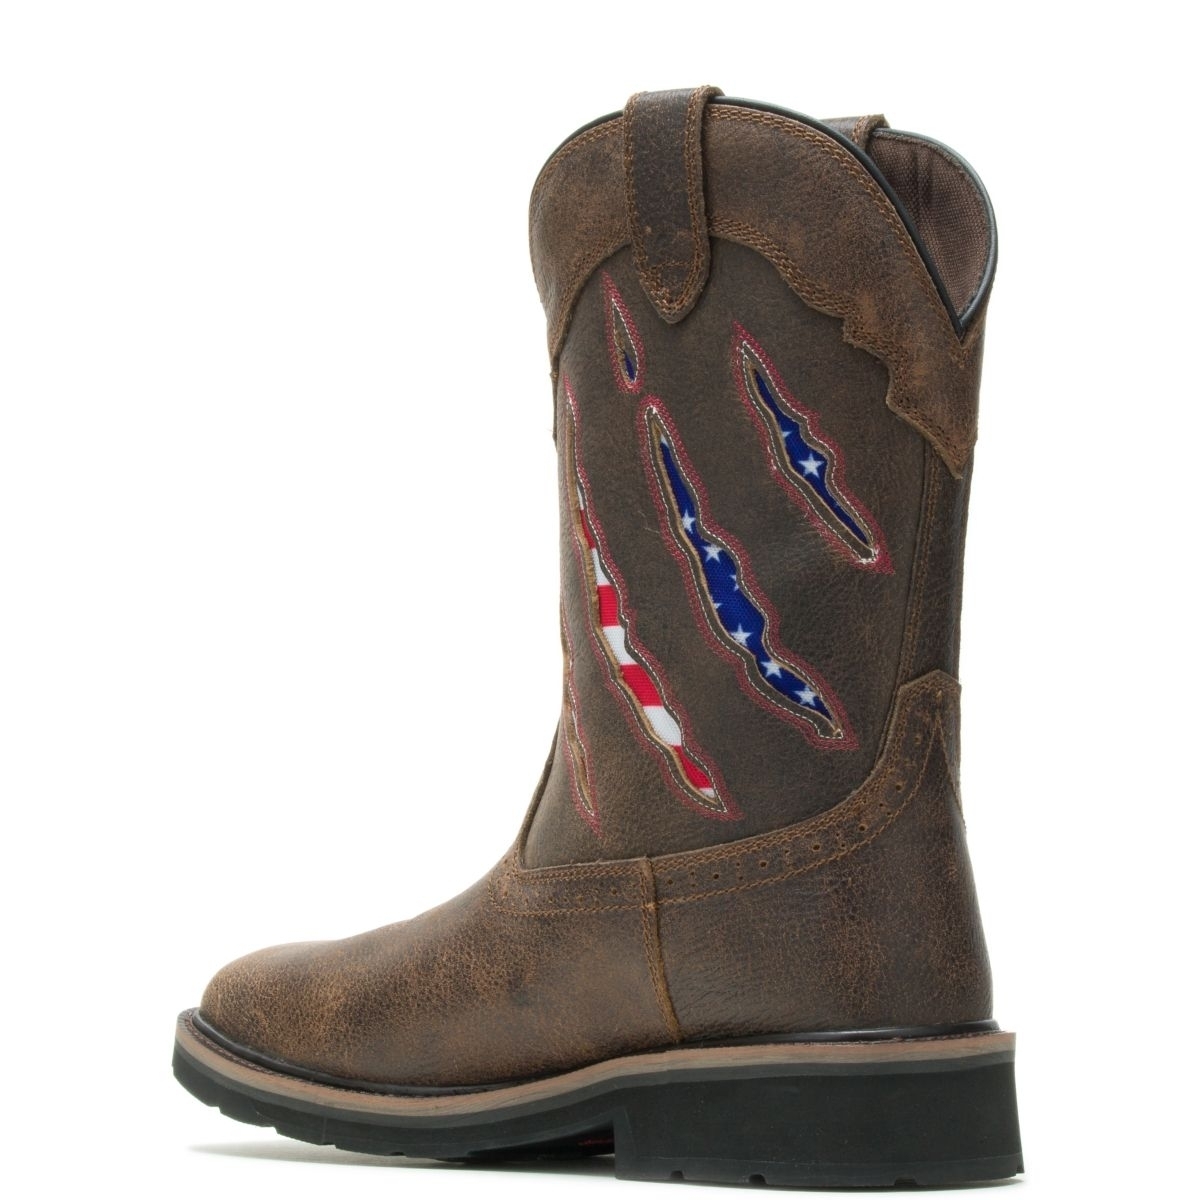 WOLVERINE Men's Rancher Claw Steel Toe Wellington Work Boot Brown/Flag - W201218 Flag/brown - Flag/brown, 12-W